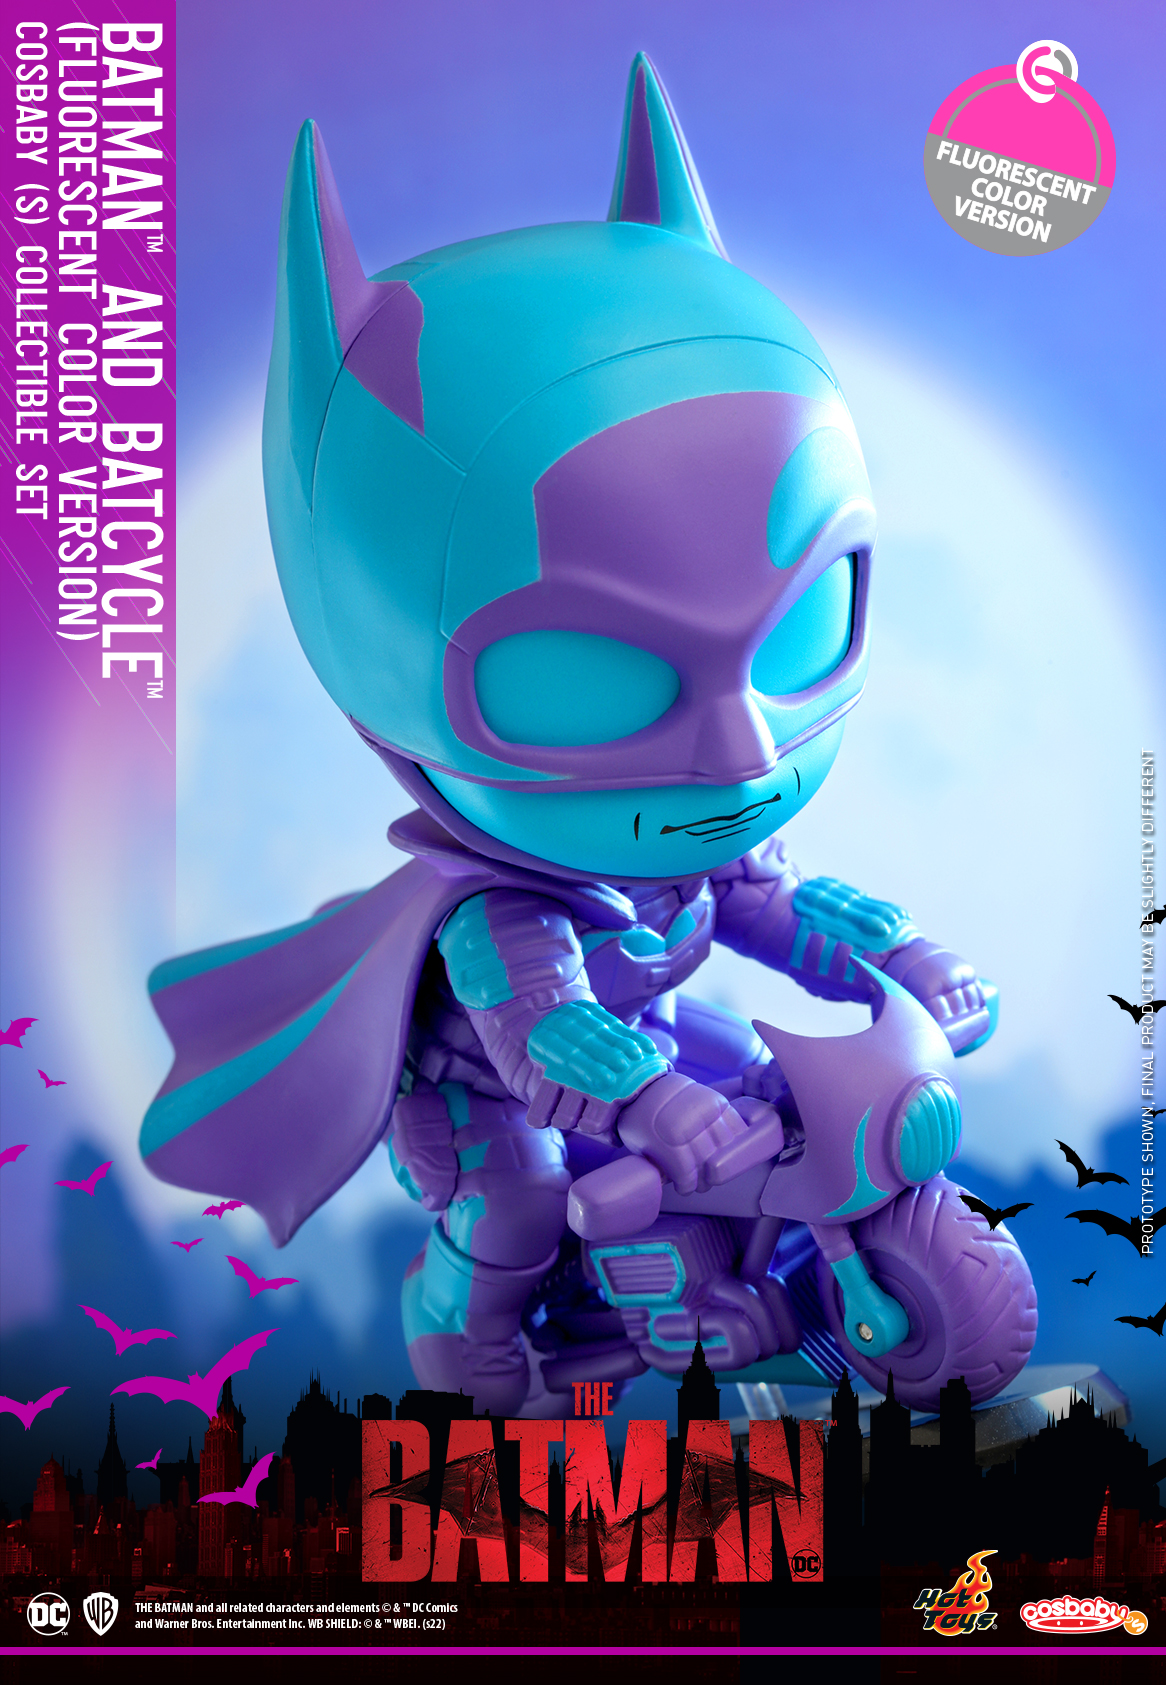 Hot Toys - Batman - Batman and Batcycle (Fluorescent color Version) Cosbaby_PR1